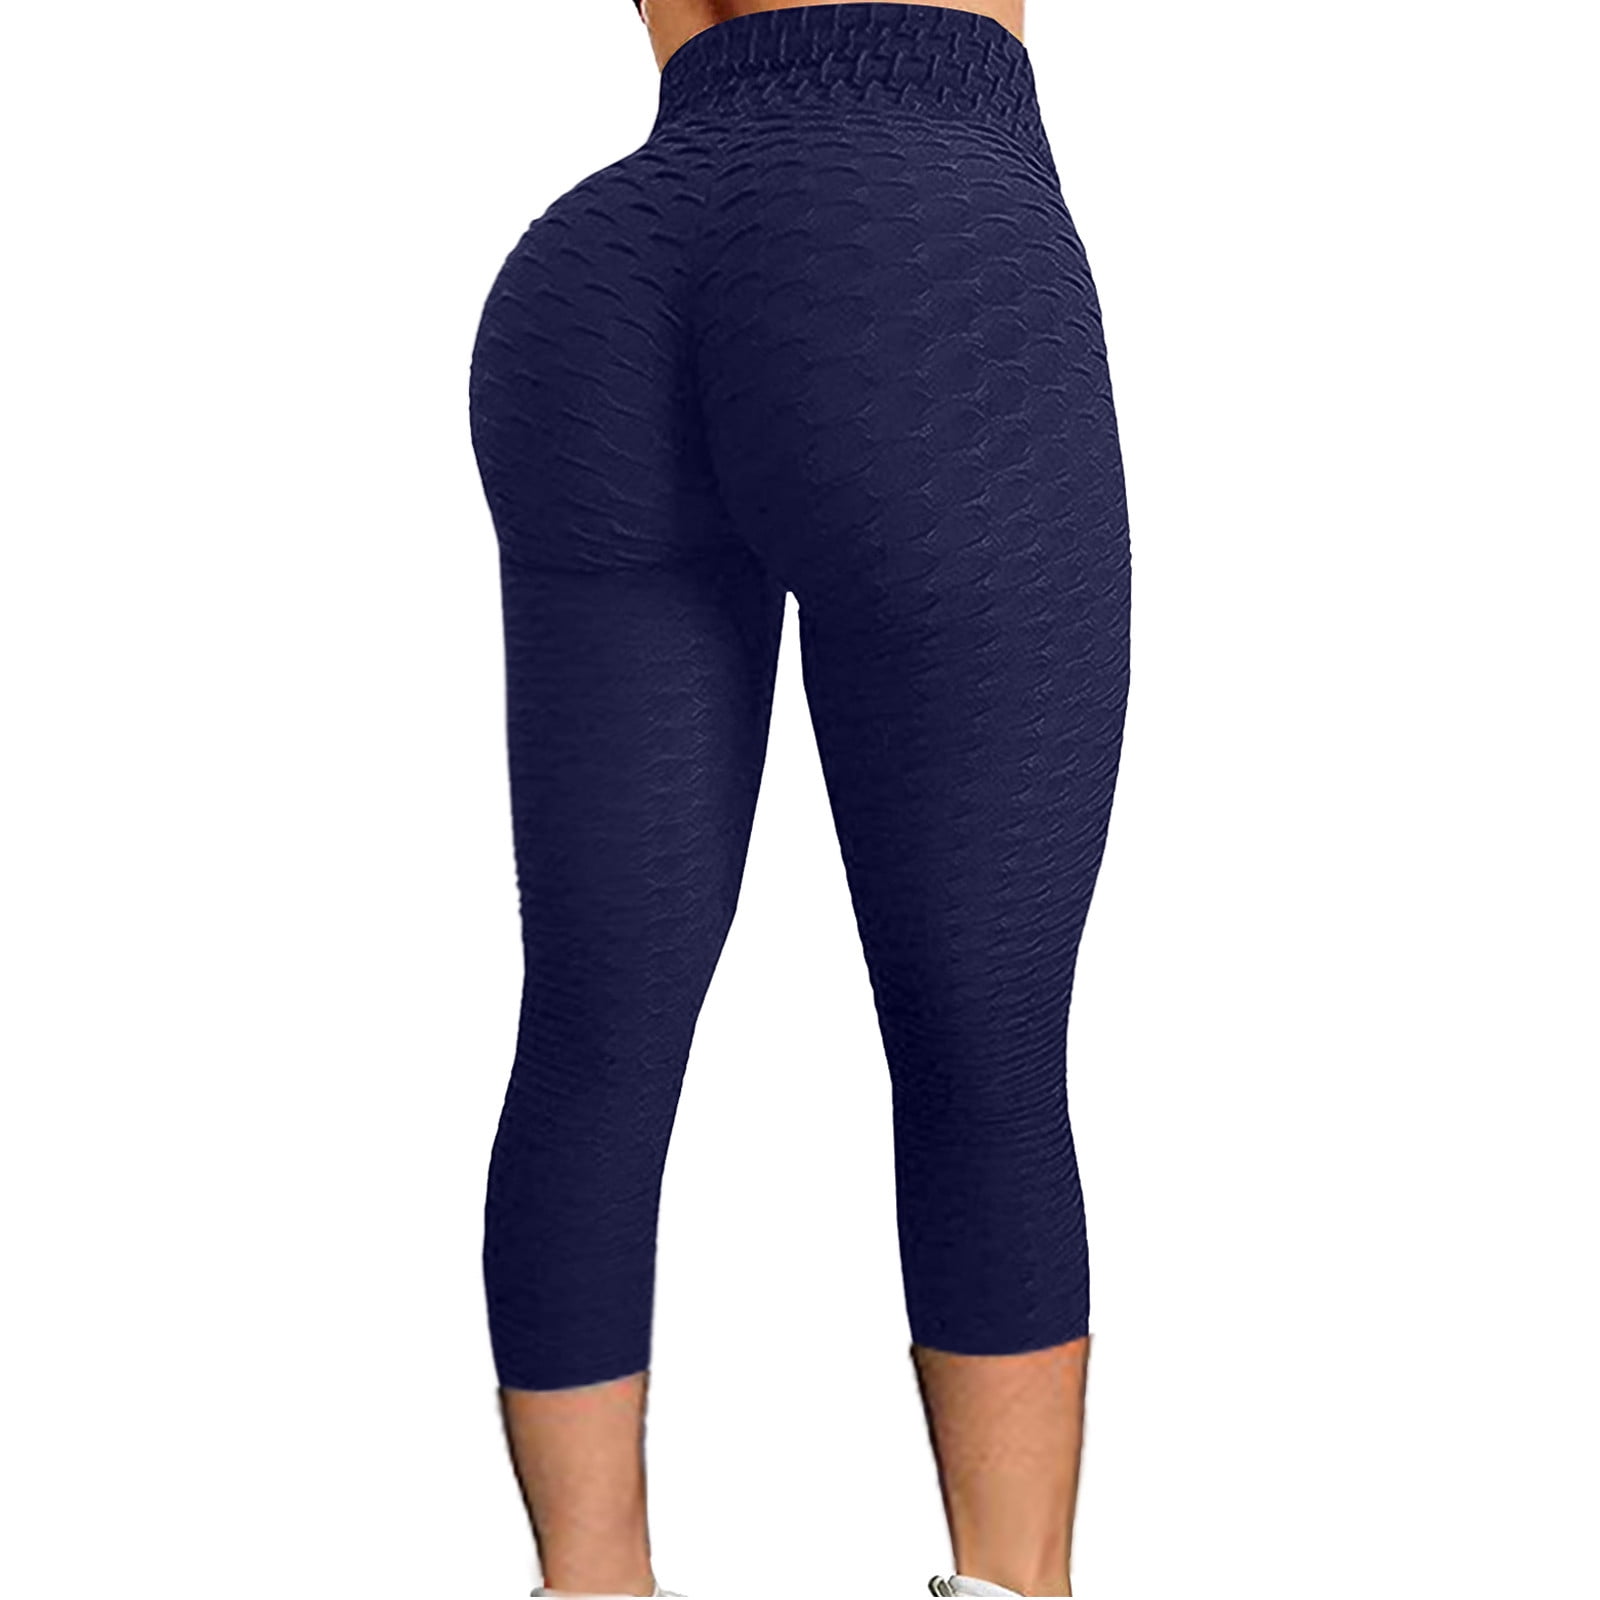 Buy 3 Pack High Waisted Leggings for Women Butt Lift Tummy Control Yoga Pants  Workout Running Pants (02 Black/Dark Grey/Navy Blue, S/M), 02 Black/Navy/Grey  at